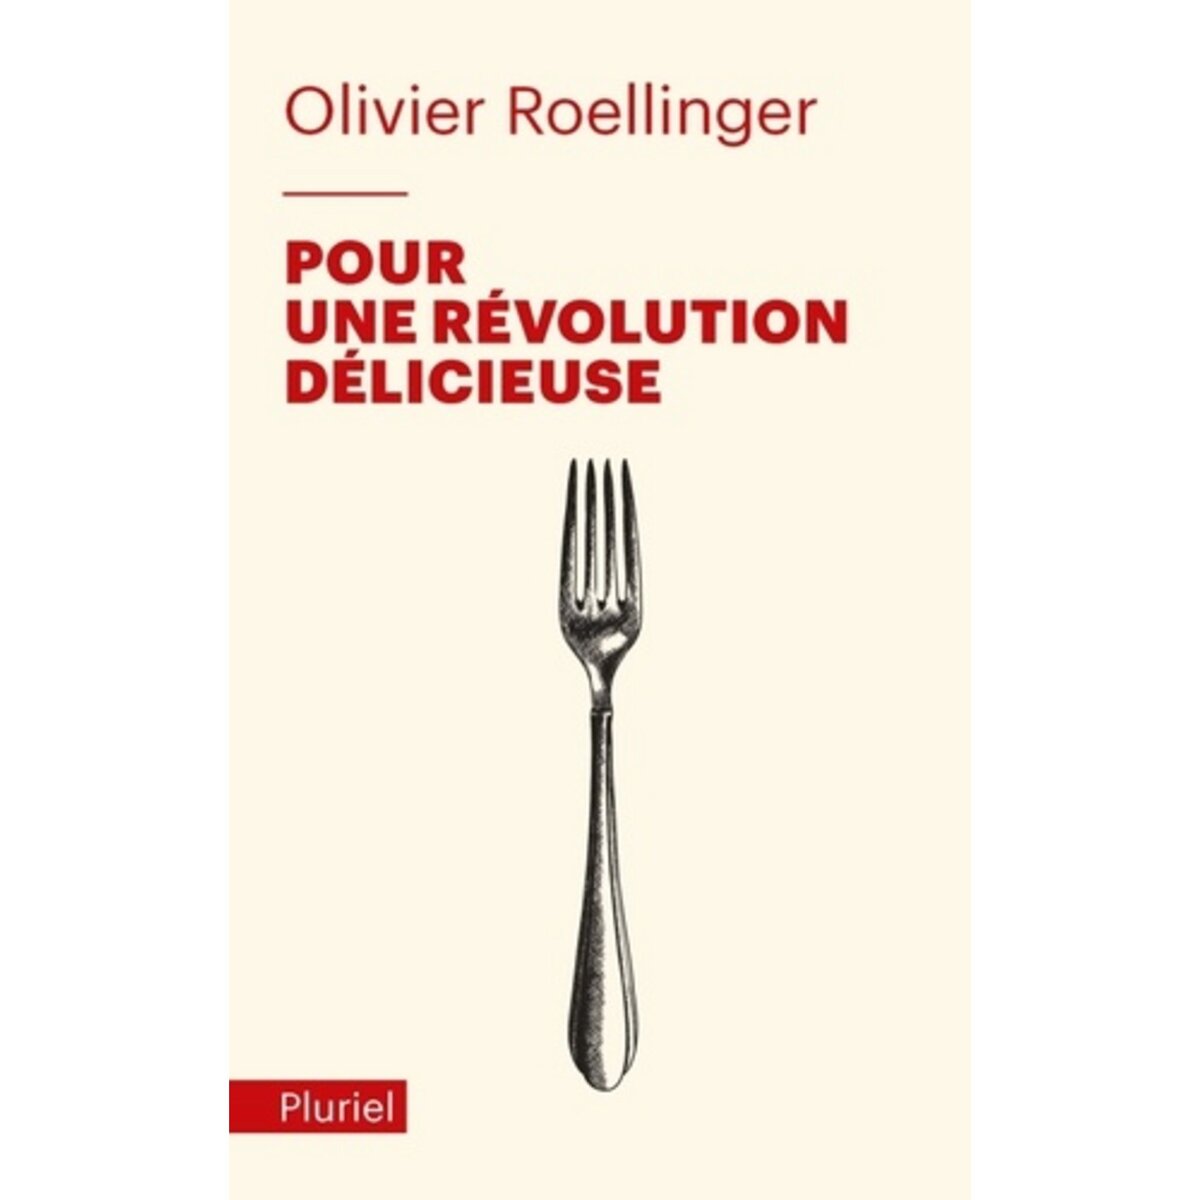  POUR UNE REVOLUTION DELICIEUSE, Roellinger Olivier